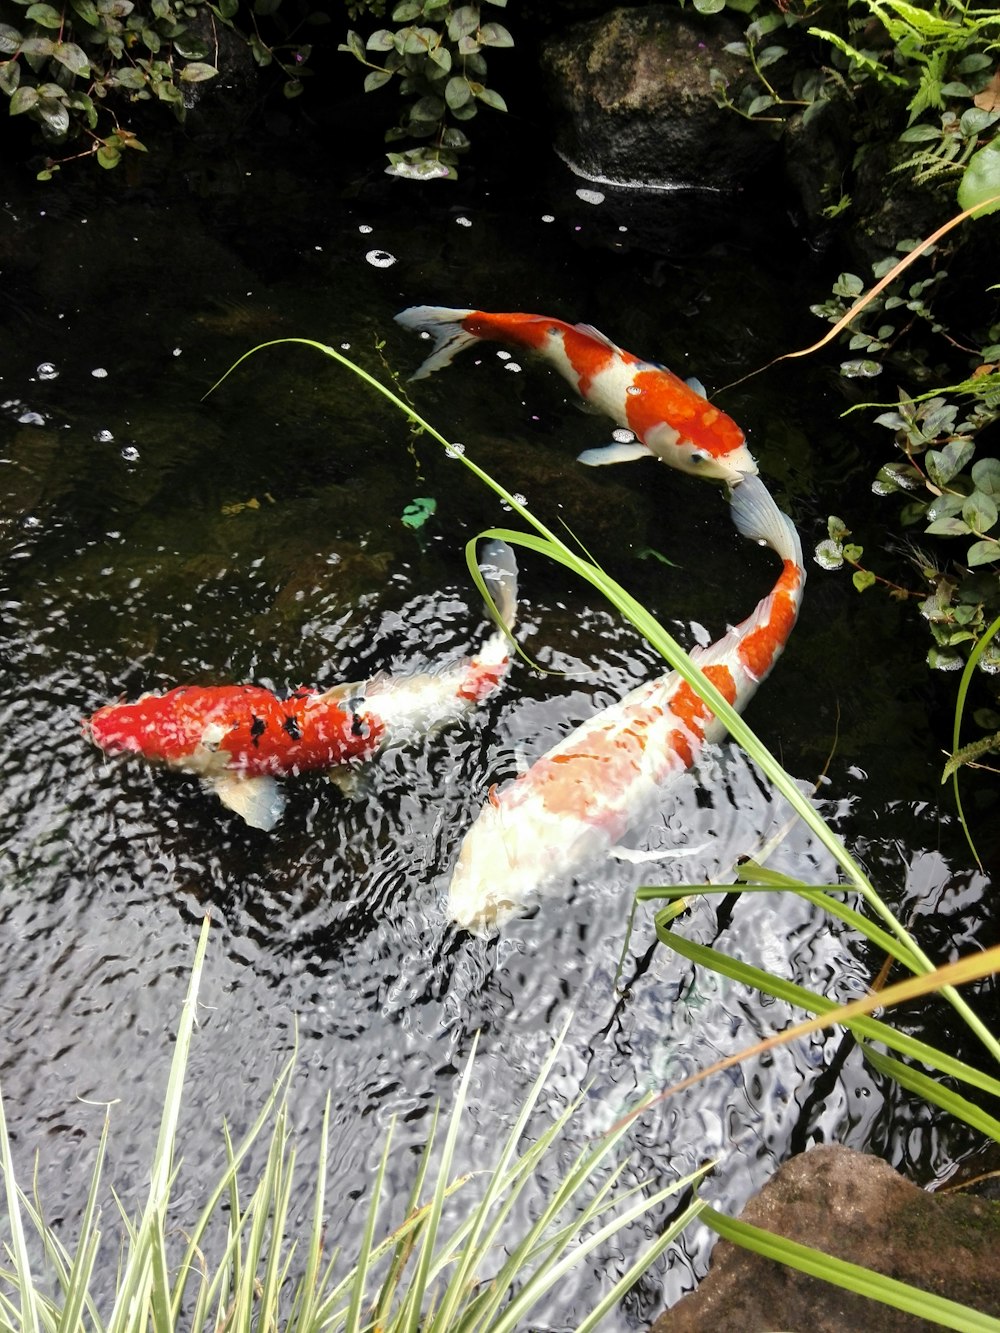 Dois peixes koi laranja e branco nadando em uma lagoa